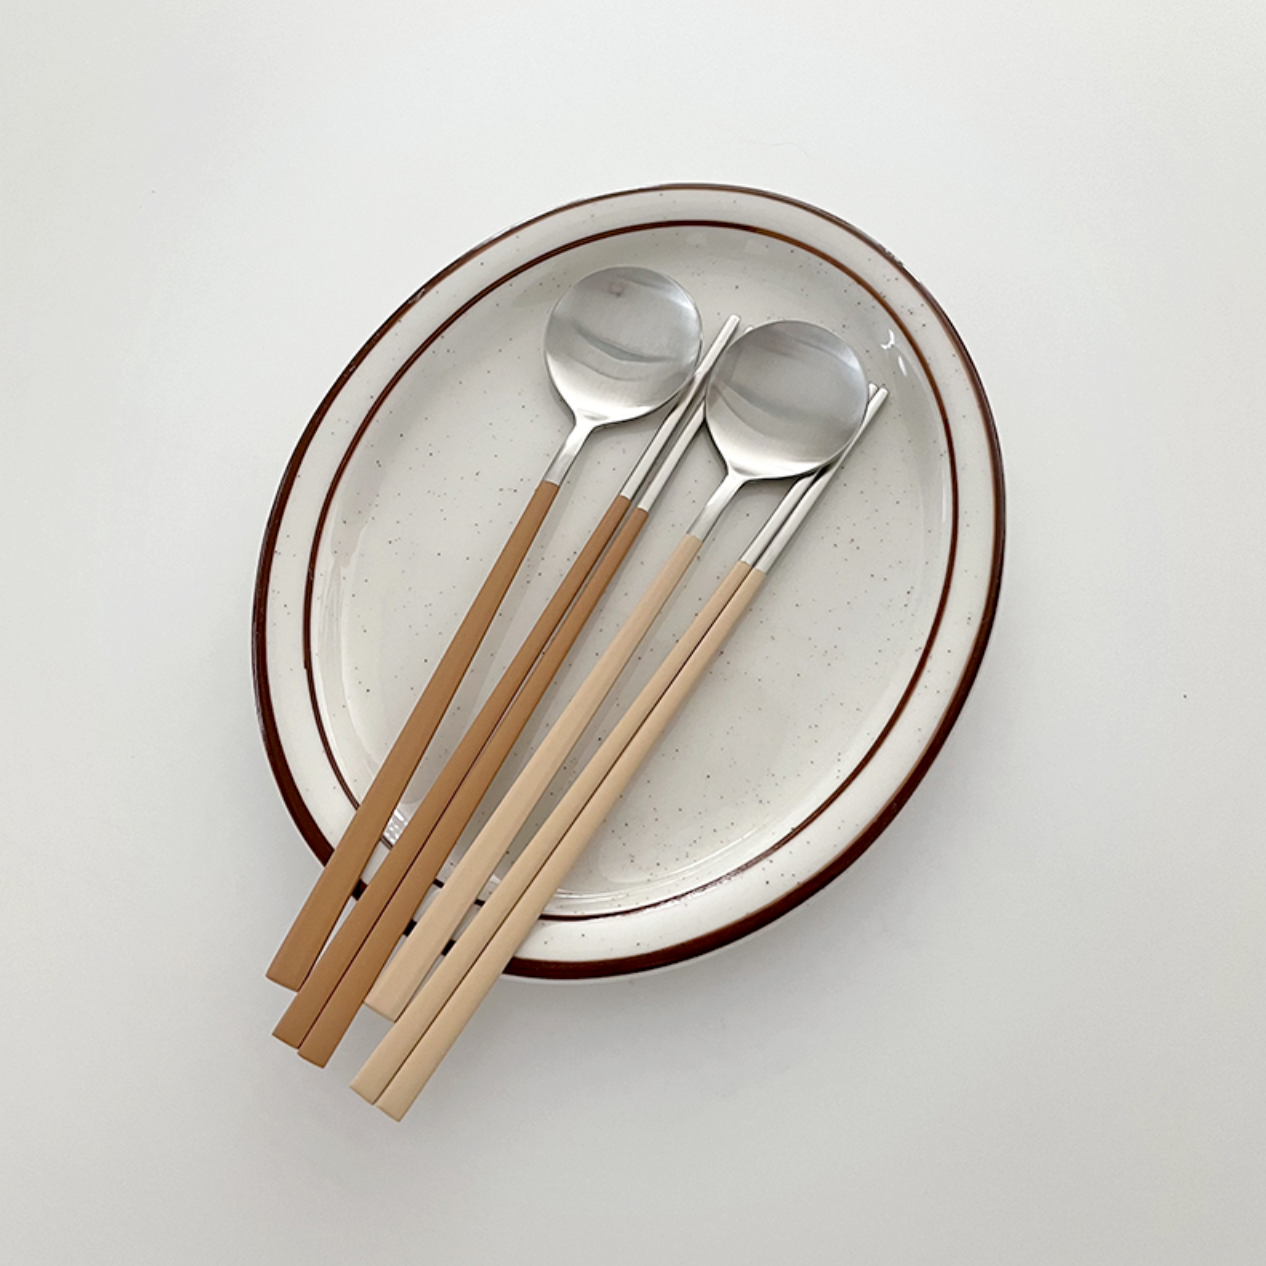 Pantone Korean Spoon and Chopsticks Rests